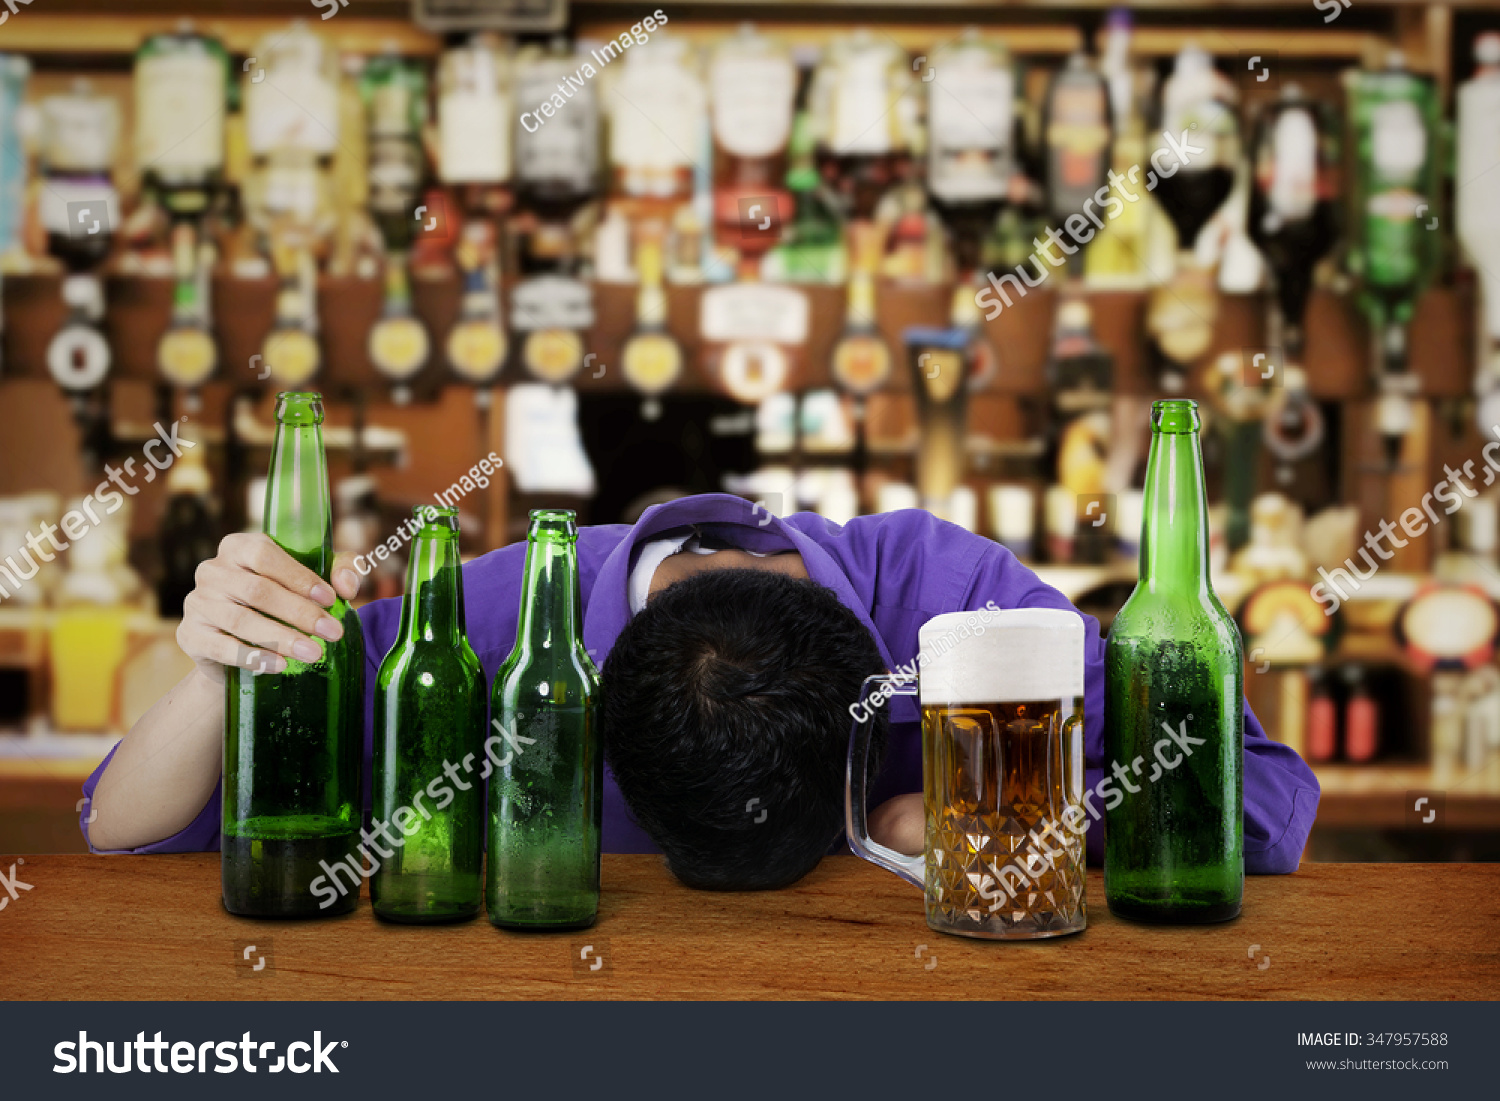 12,148 Drunk person bar Images, Stock Photos & Vectors | Shutterstock